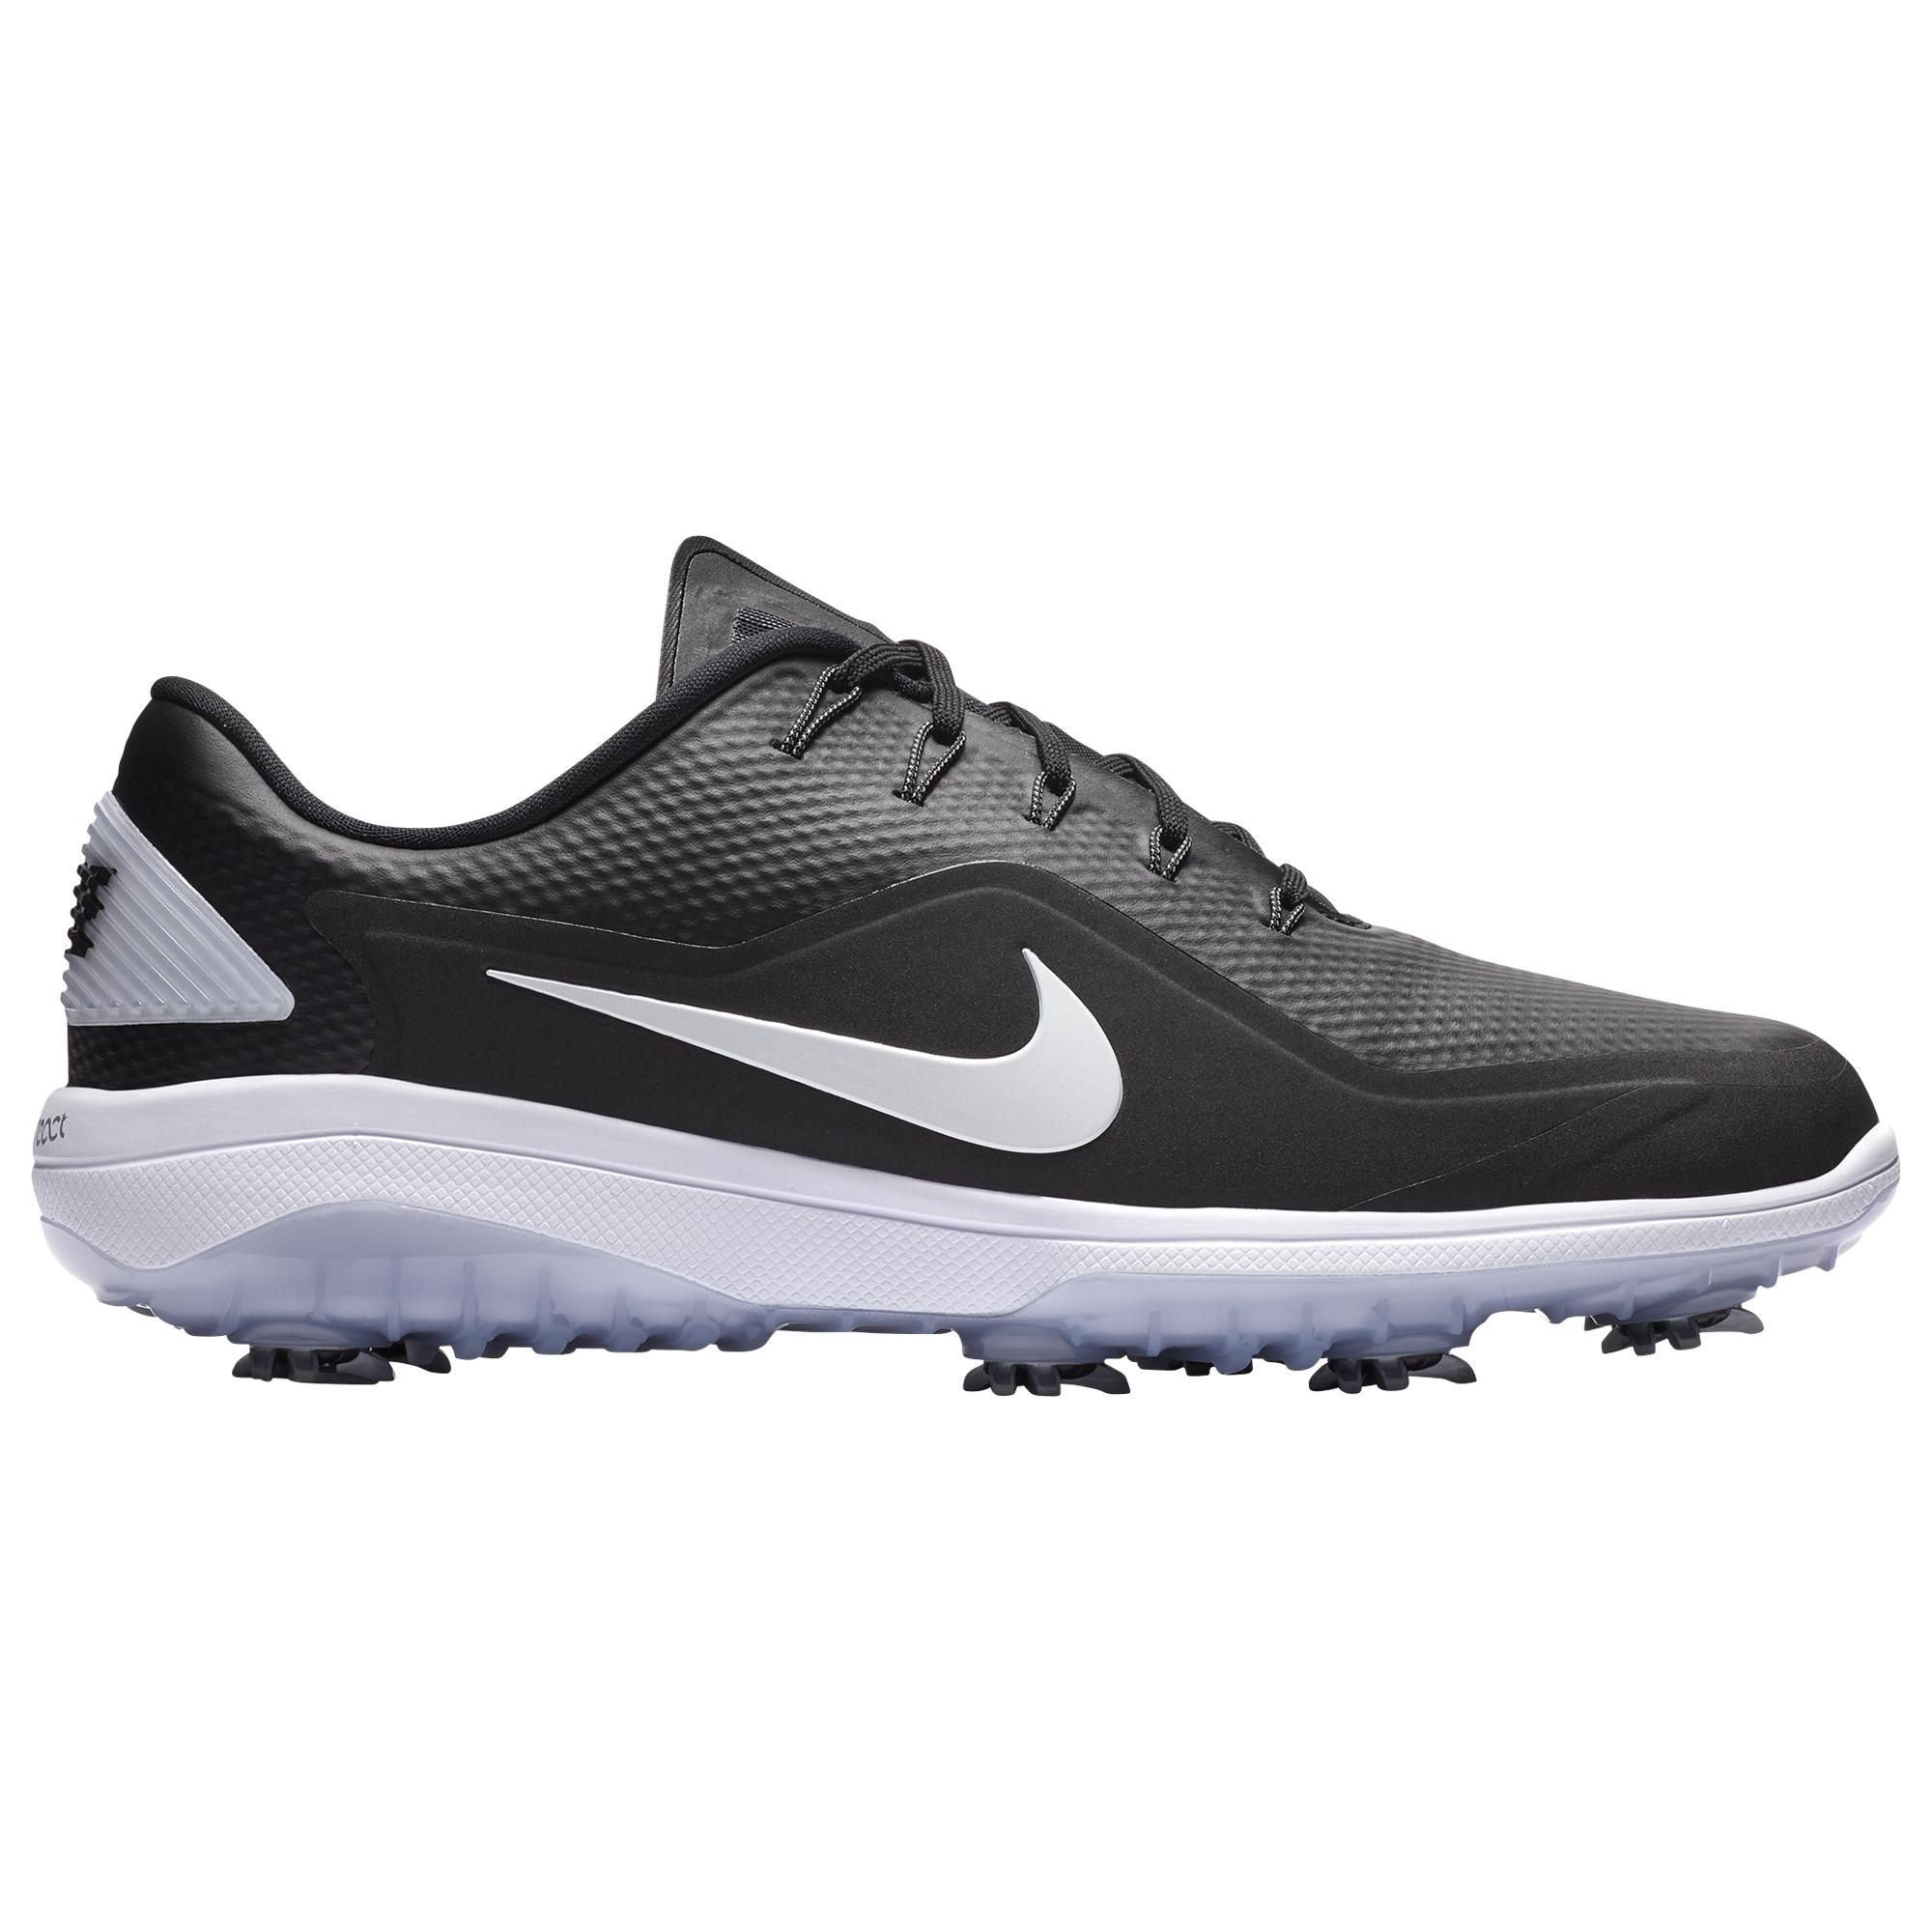 Nike React Vapor 2 Coated-mesh Golf Shoes in Black for Men - Lyst